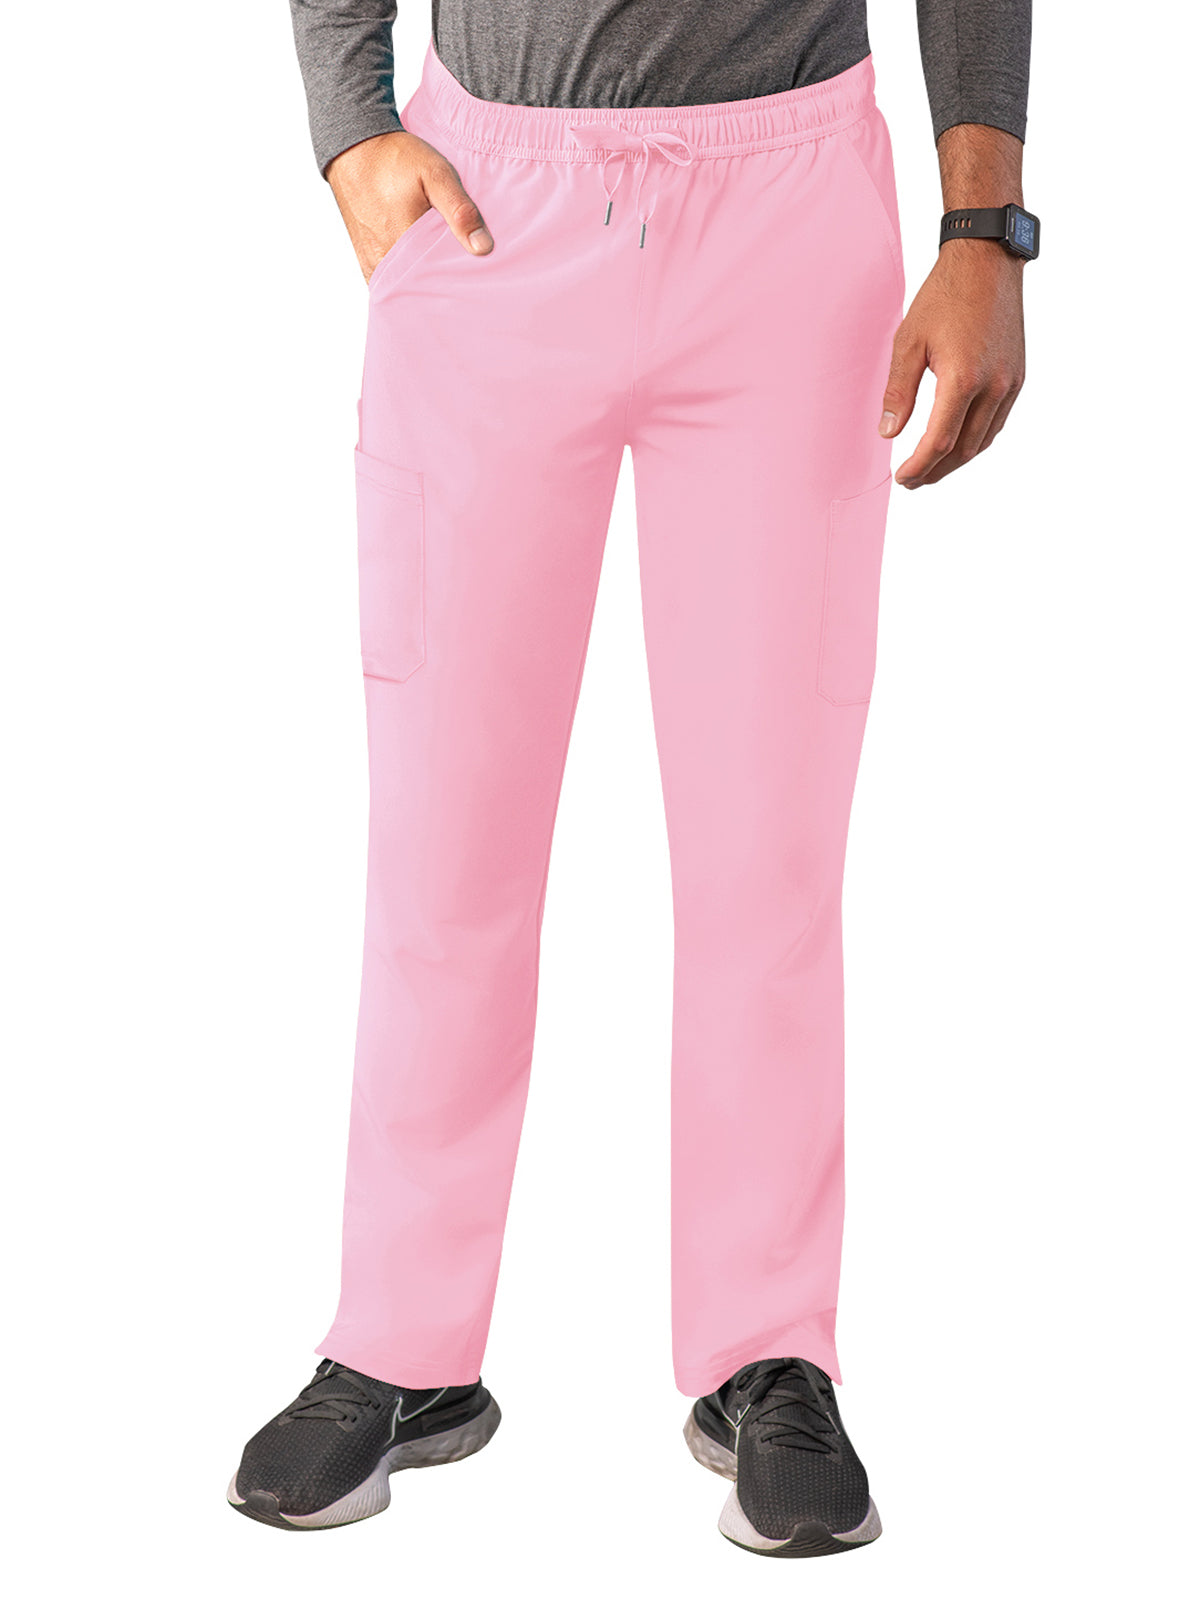 Men's Drawstring Cargo Pant - A6106 - Soft Pink